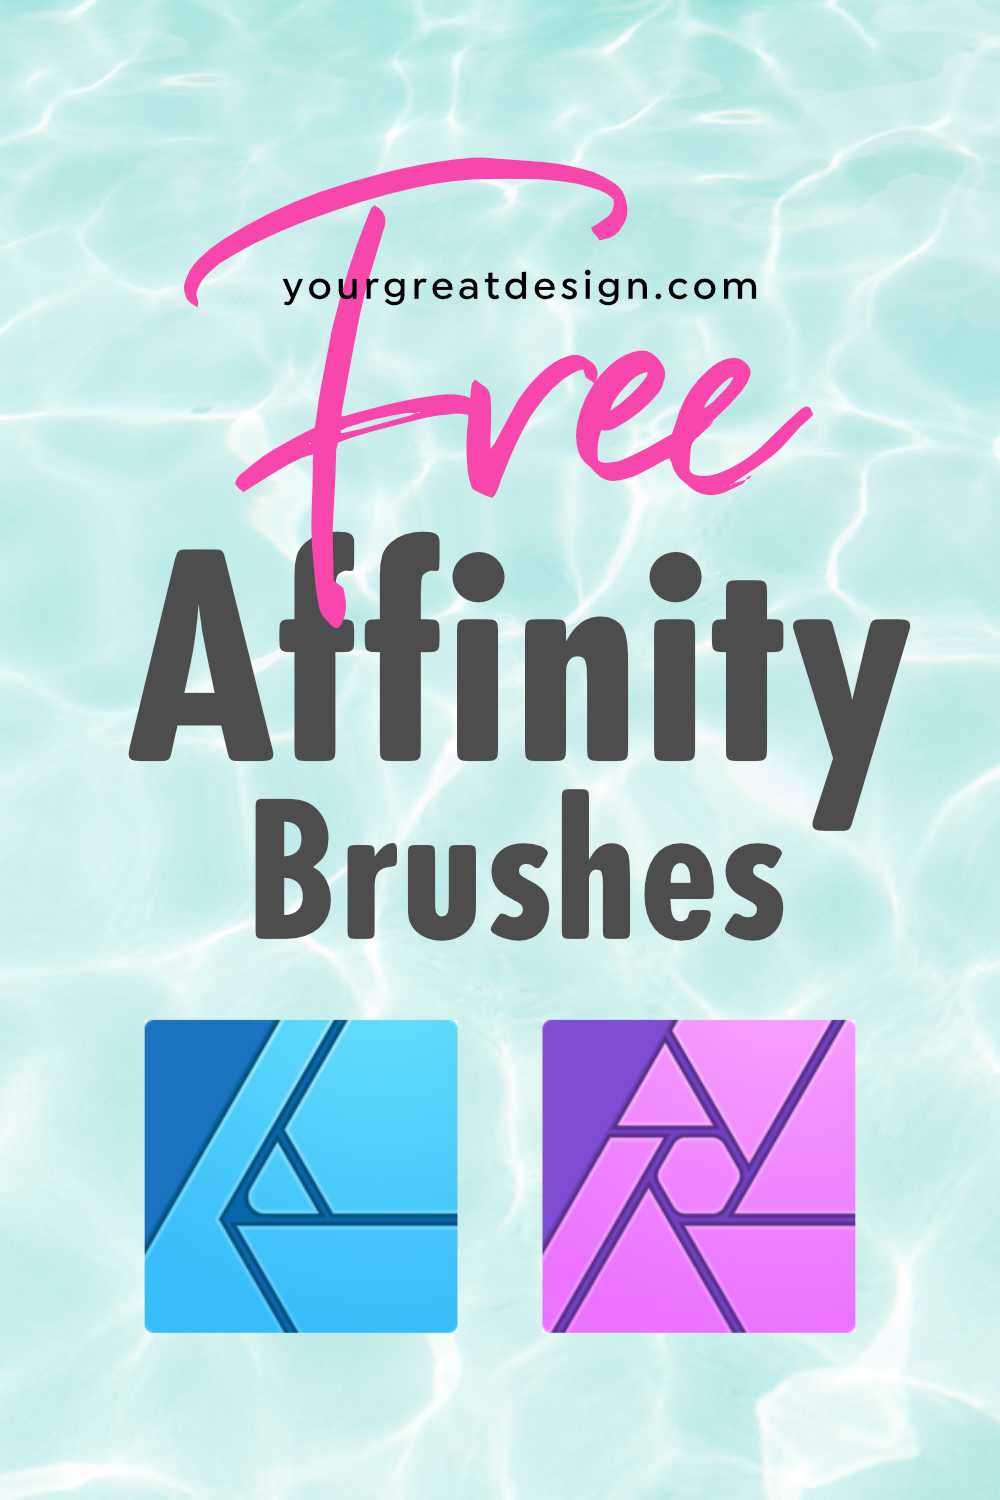 Download free brushes for Affinity Designer & Photo